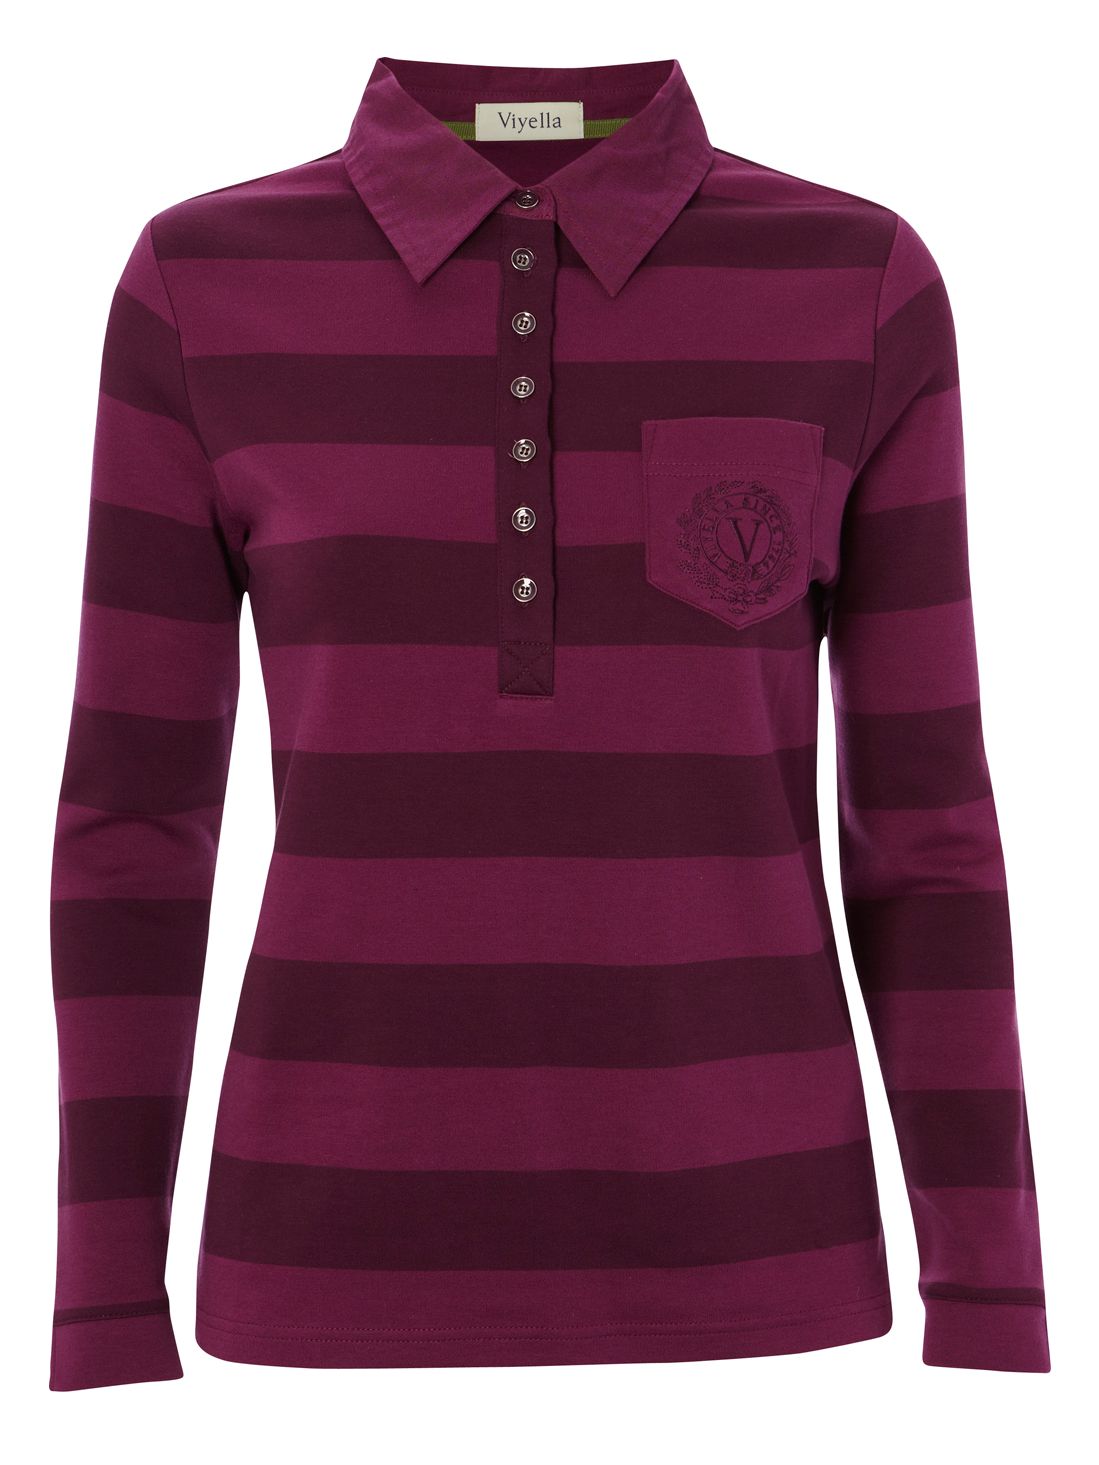 Viyella Long Sleeve Stripe Rugby Shirt, Cranberry